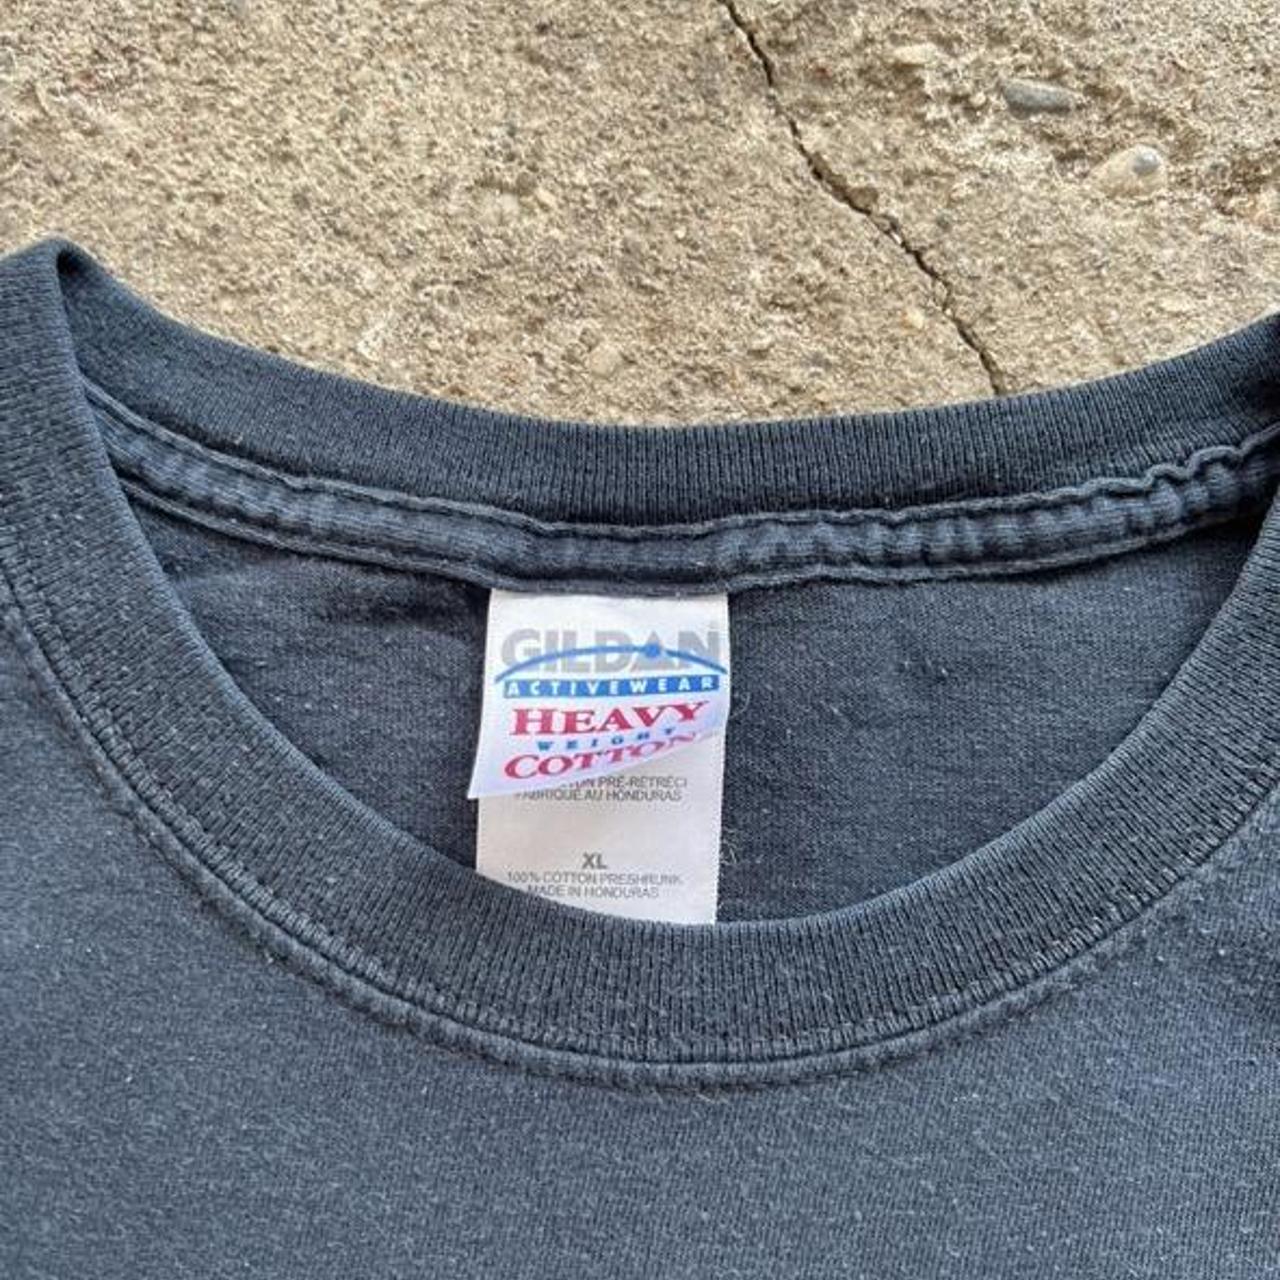 Product Image 4 - Vintage Misfits t-shirt 

Size: XL
Condition: